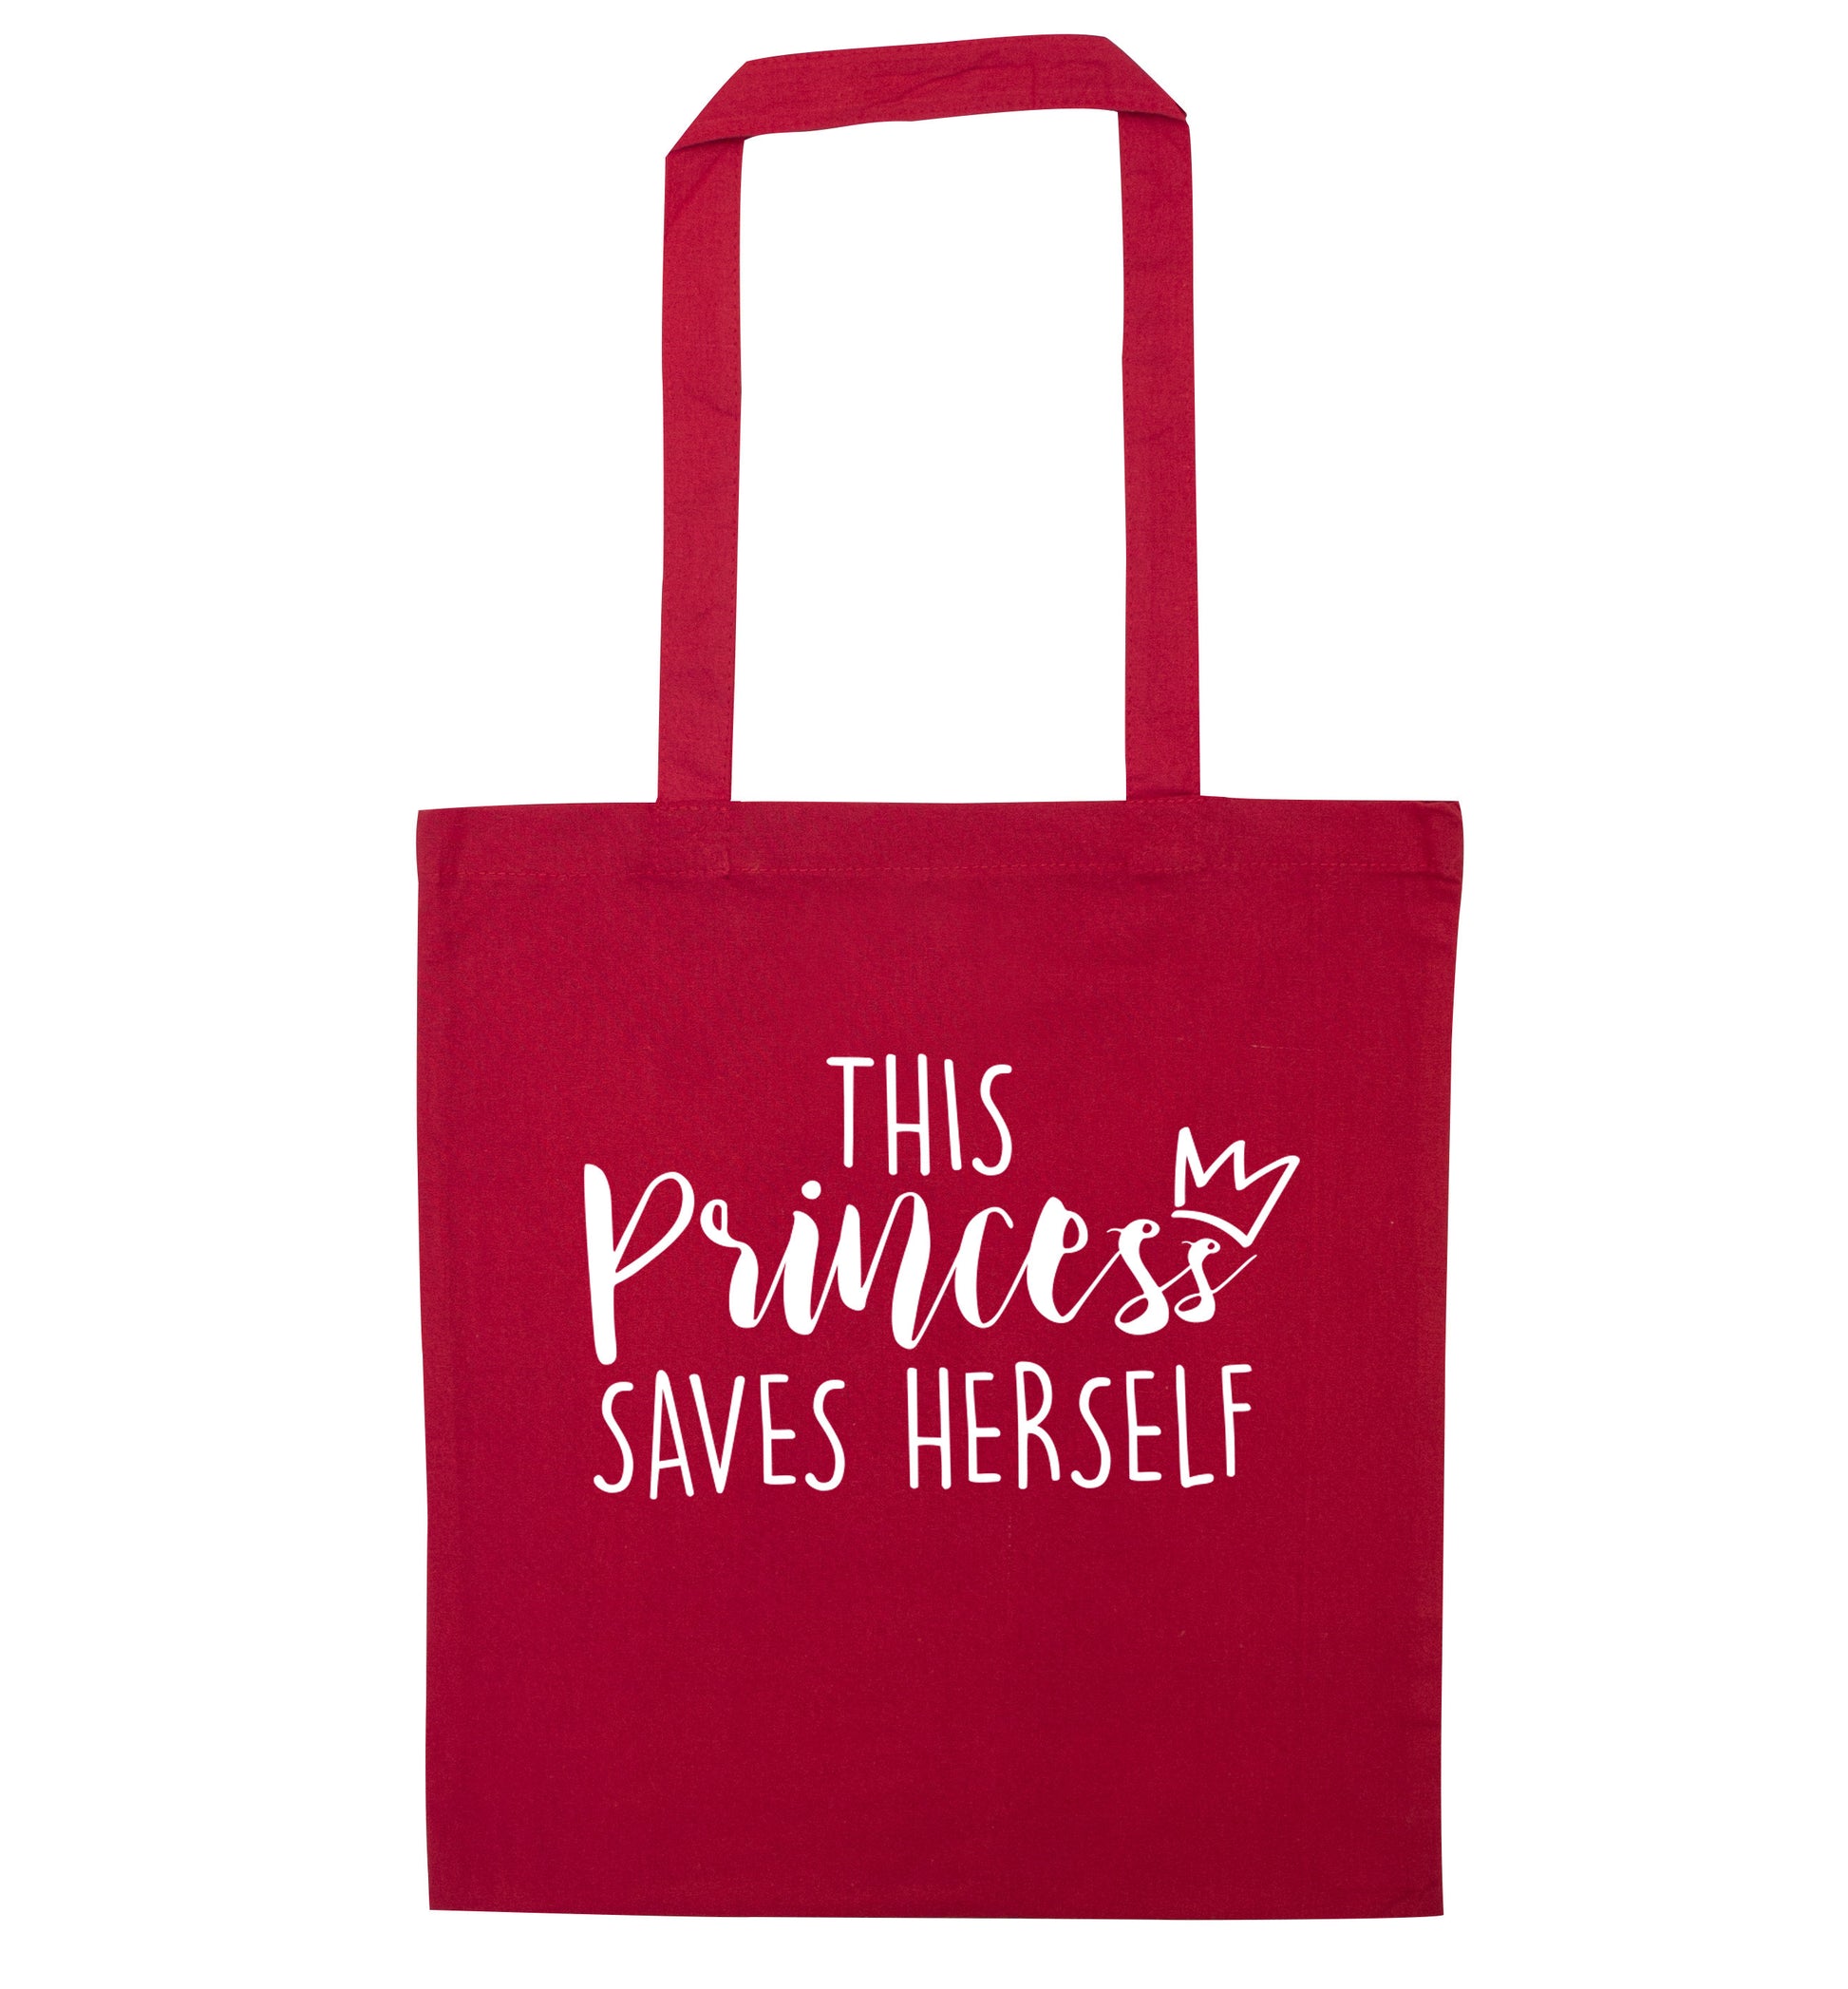 This princess saves herself red tote bag